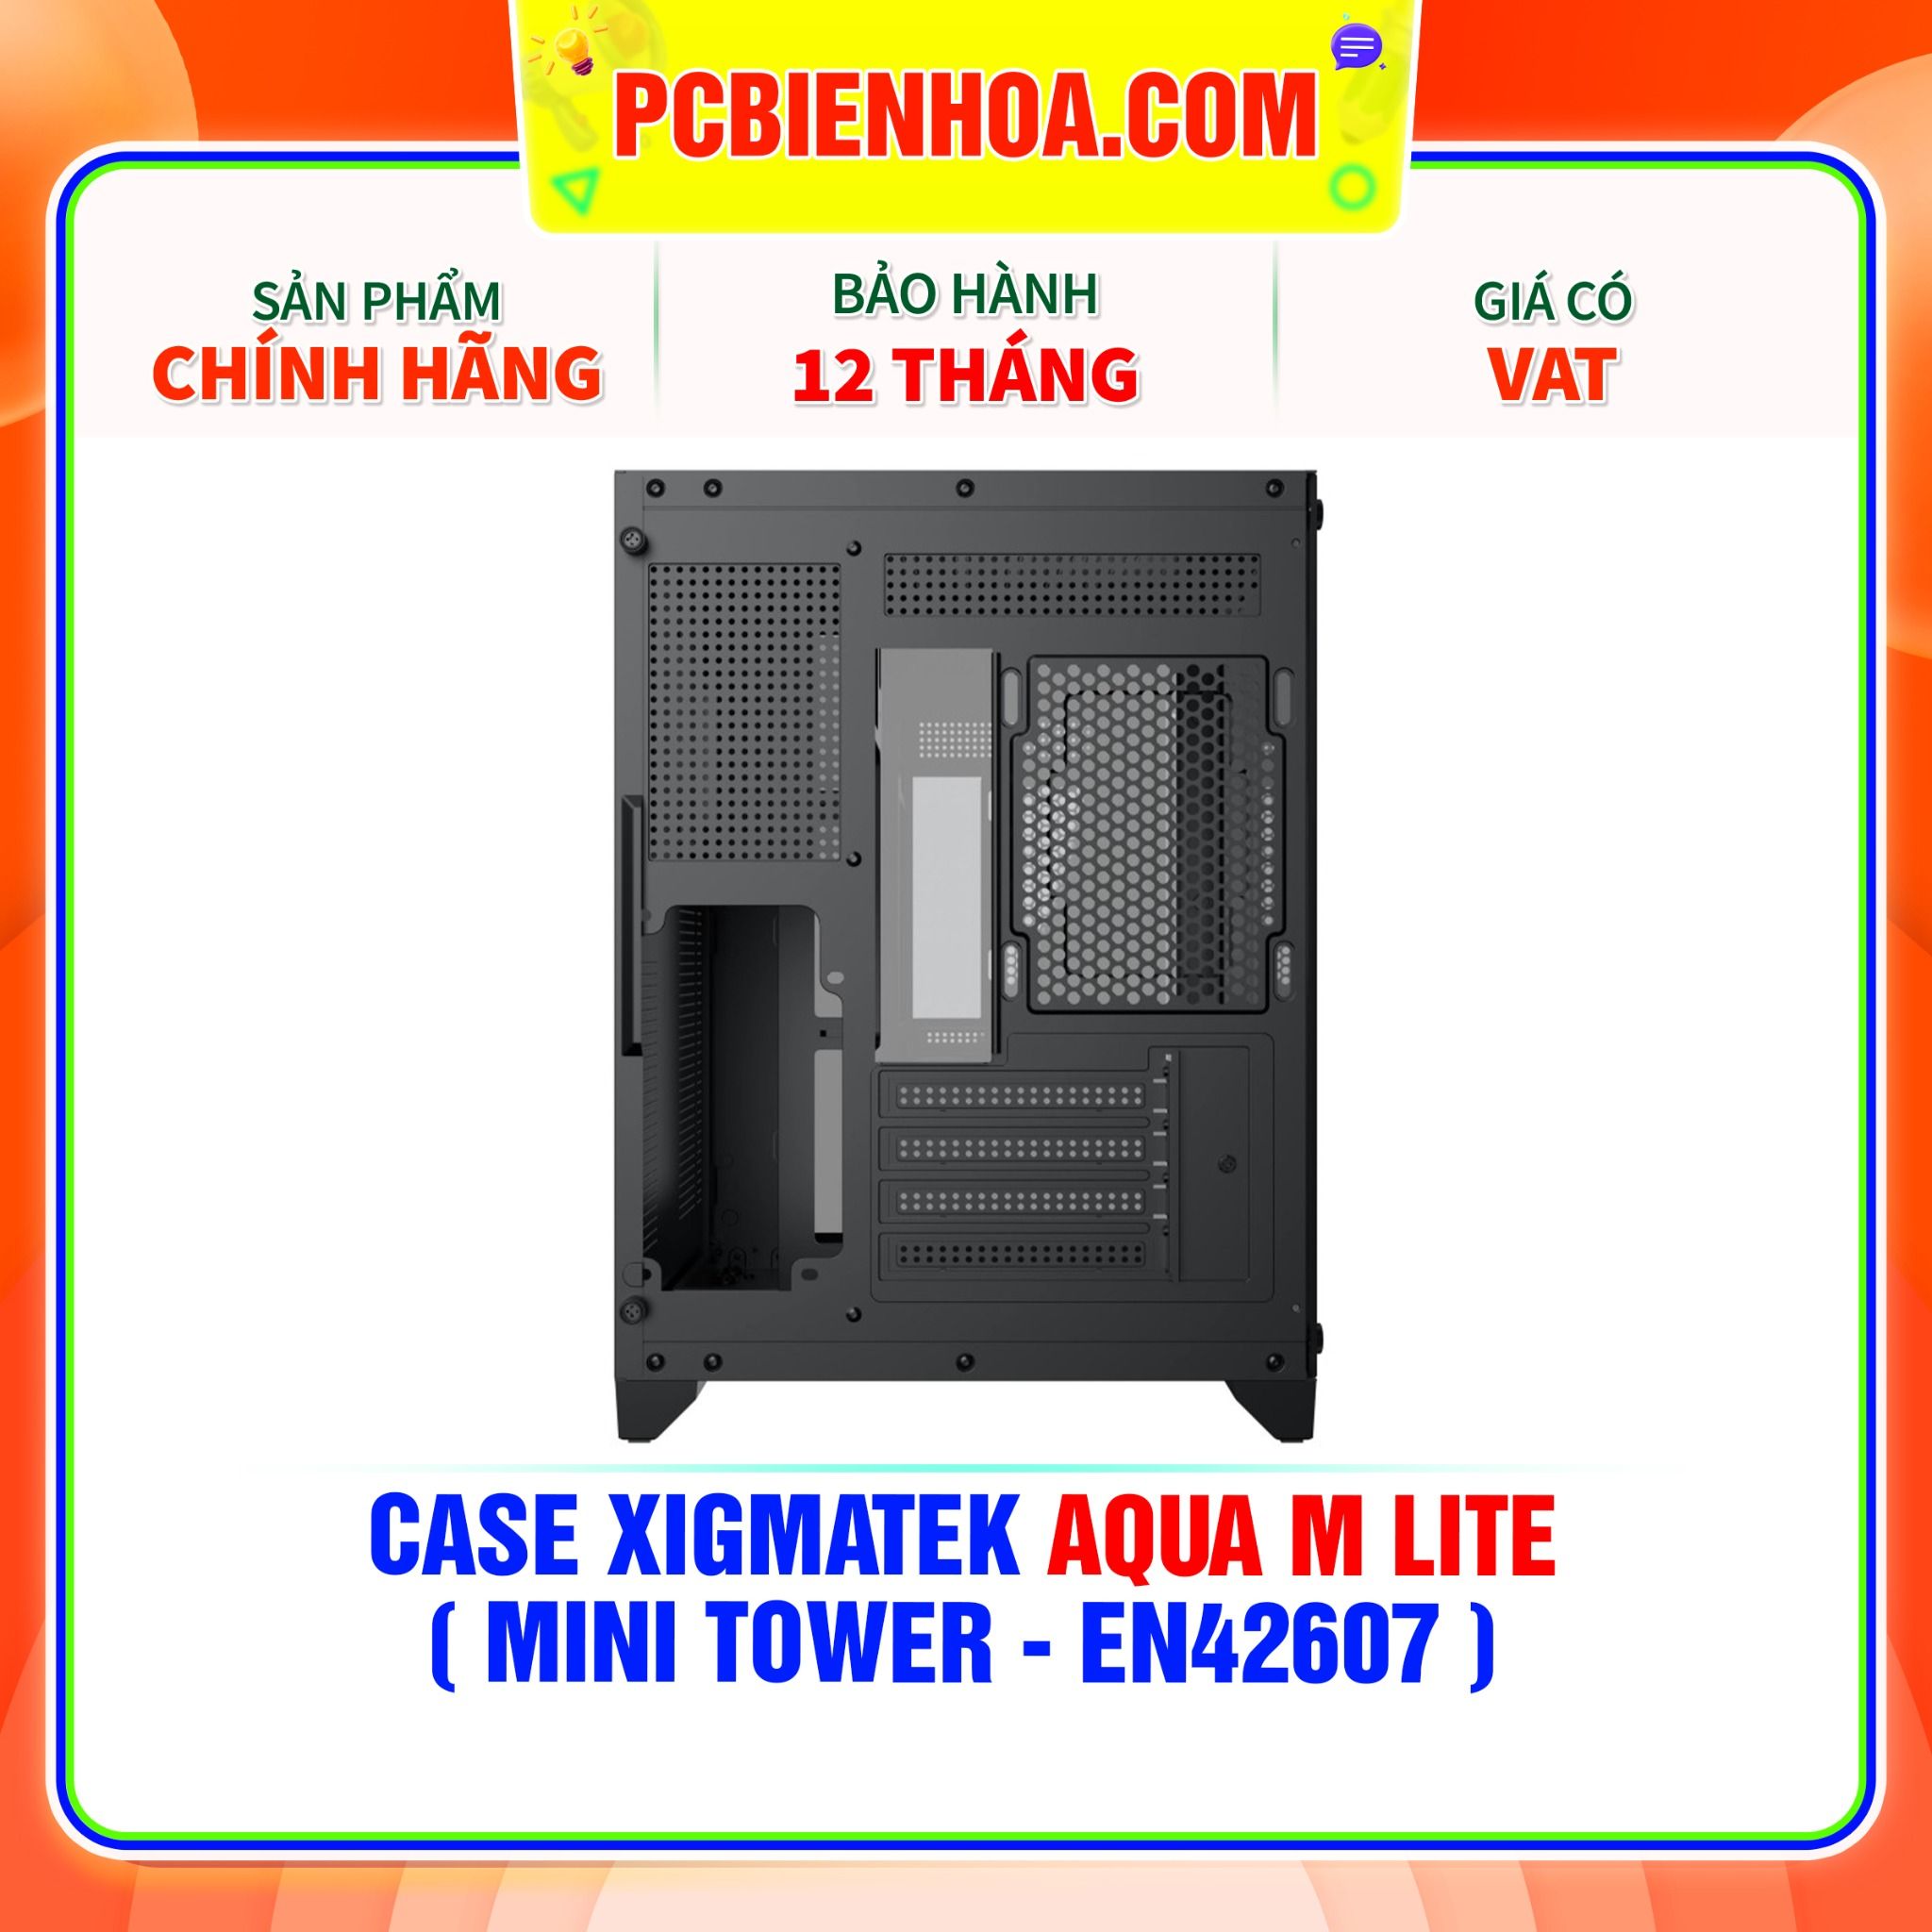  CASE XIGMATEK AQUA M LITE - ( MINI TOWER - EN42607 ) 